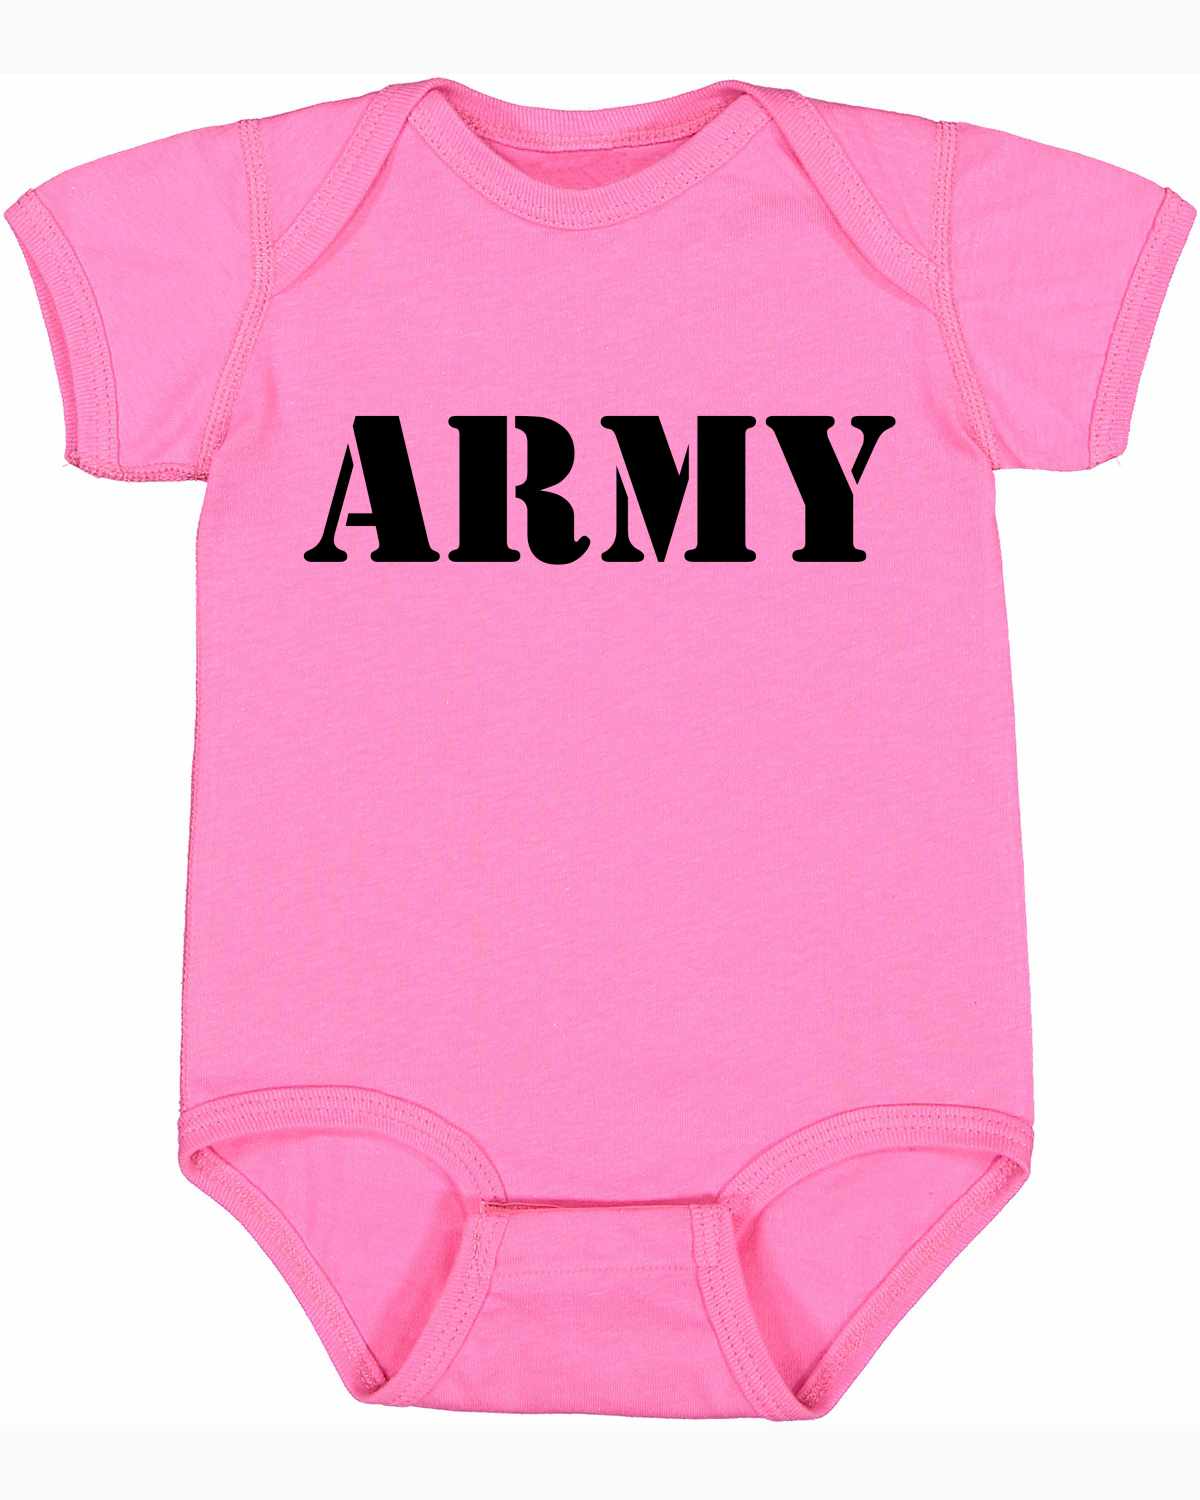 ARMY on Infant BodySuit (#338-10)